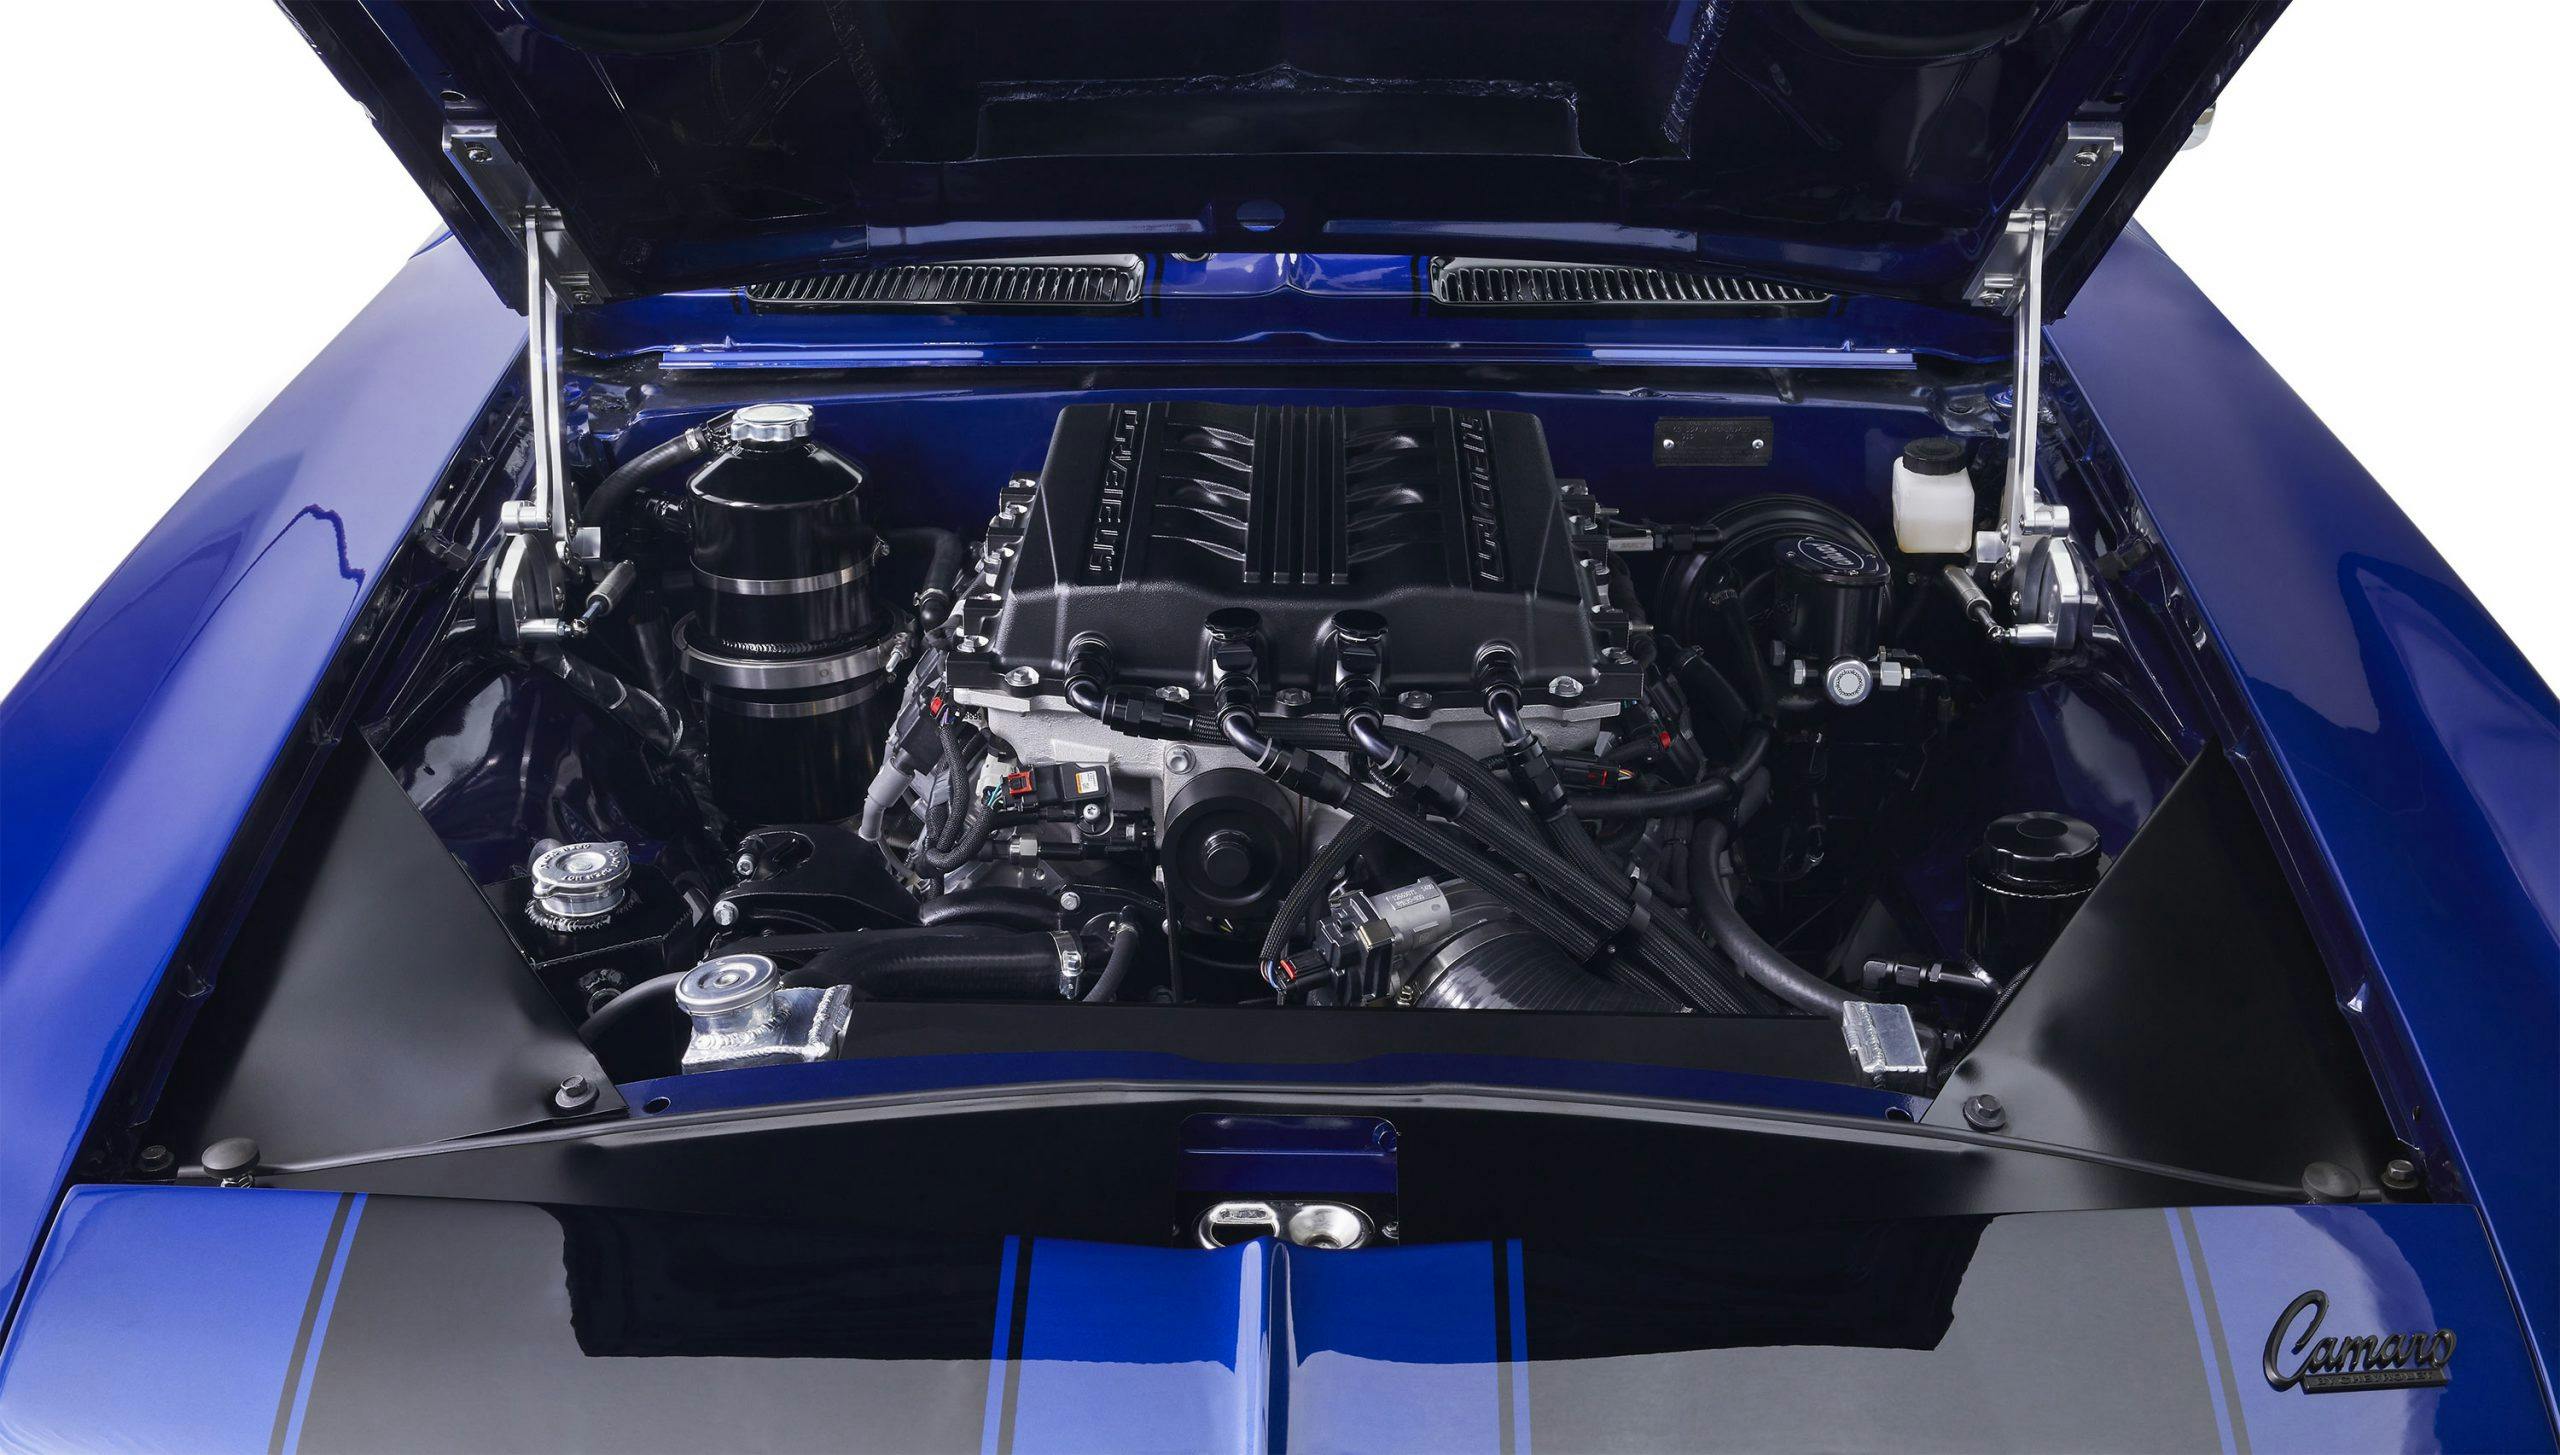 Kindred restomod Camaro LT engine